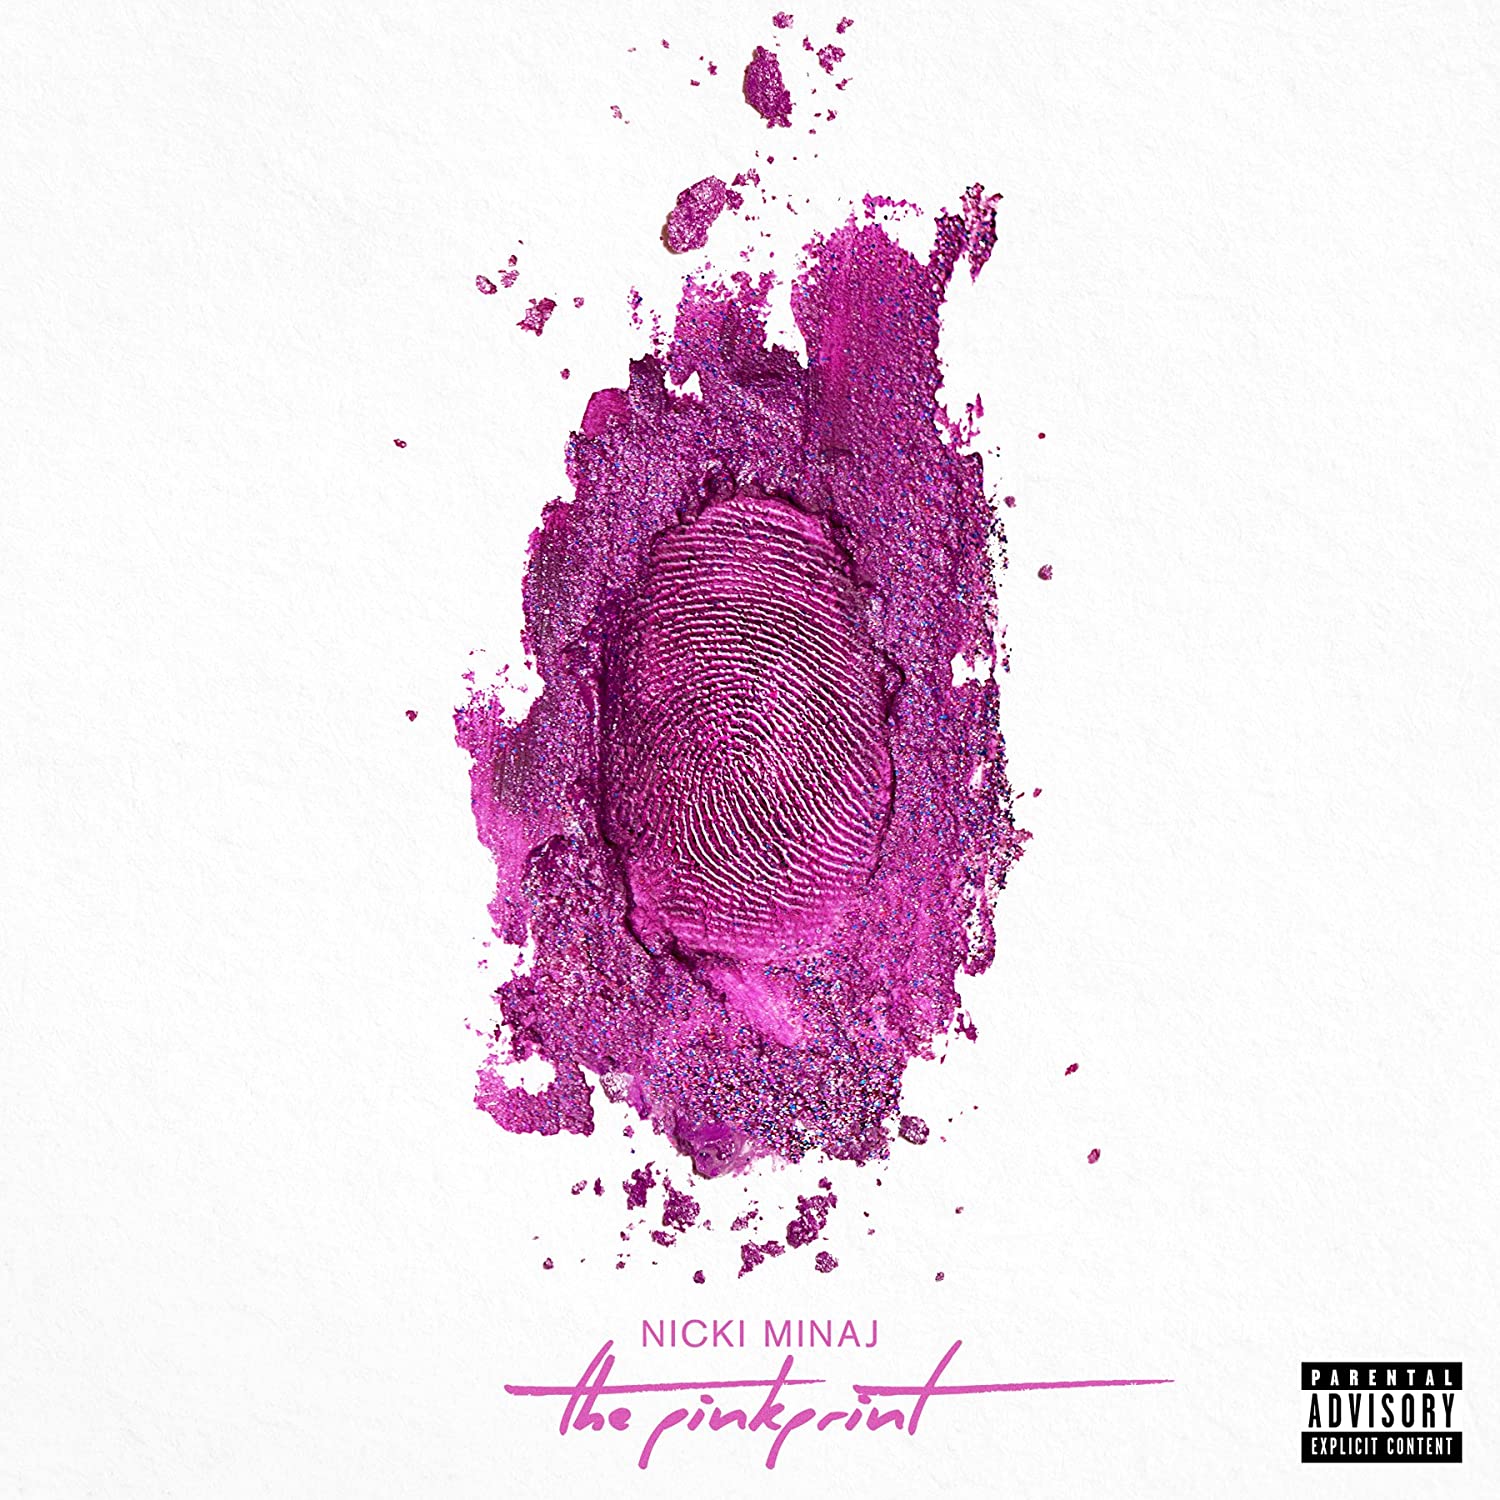 The Pinkprint album cover